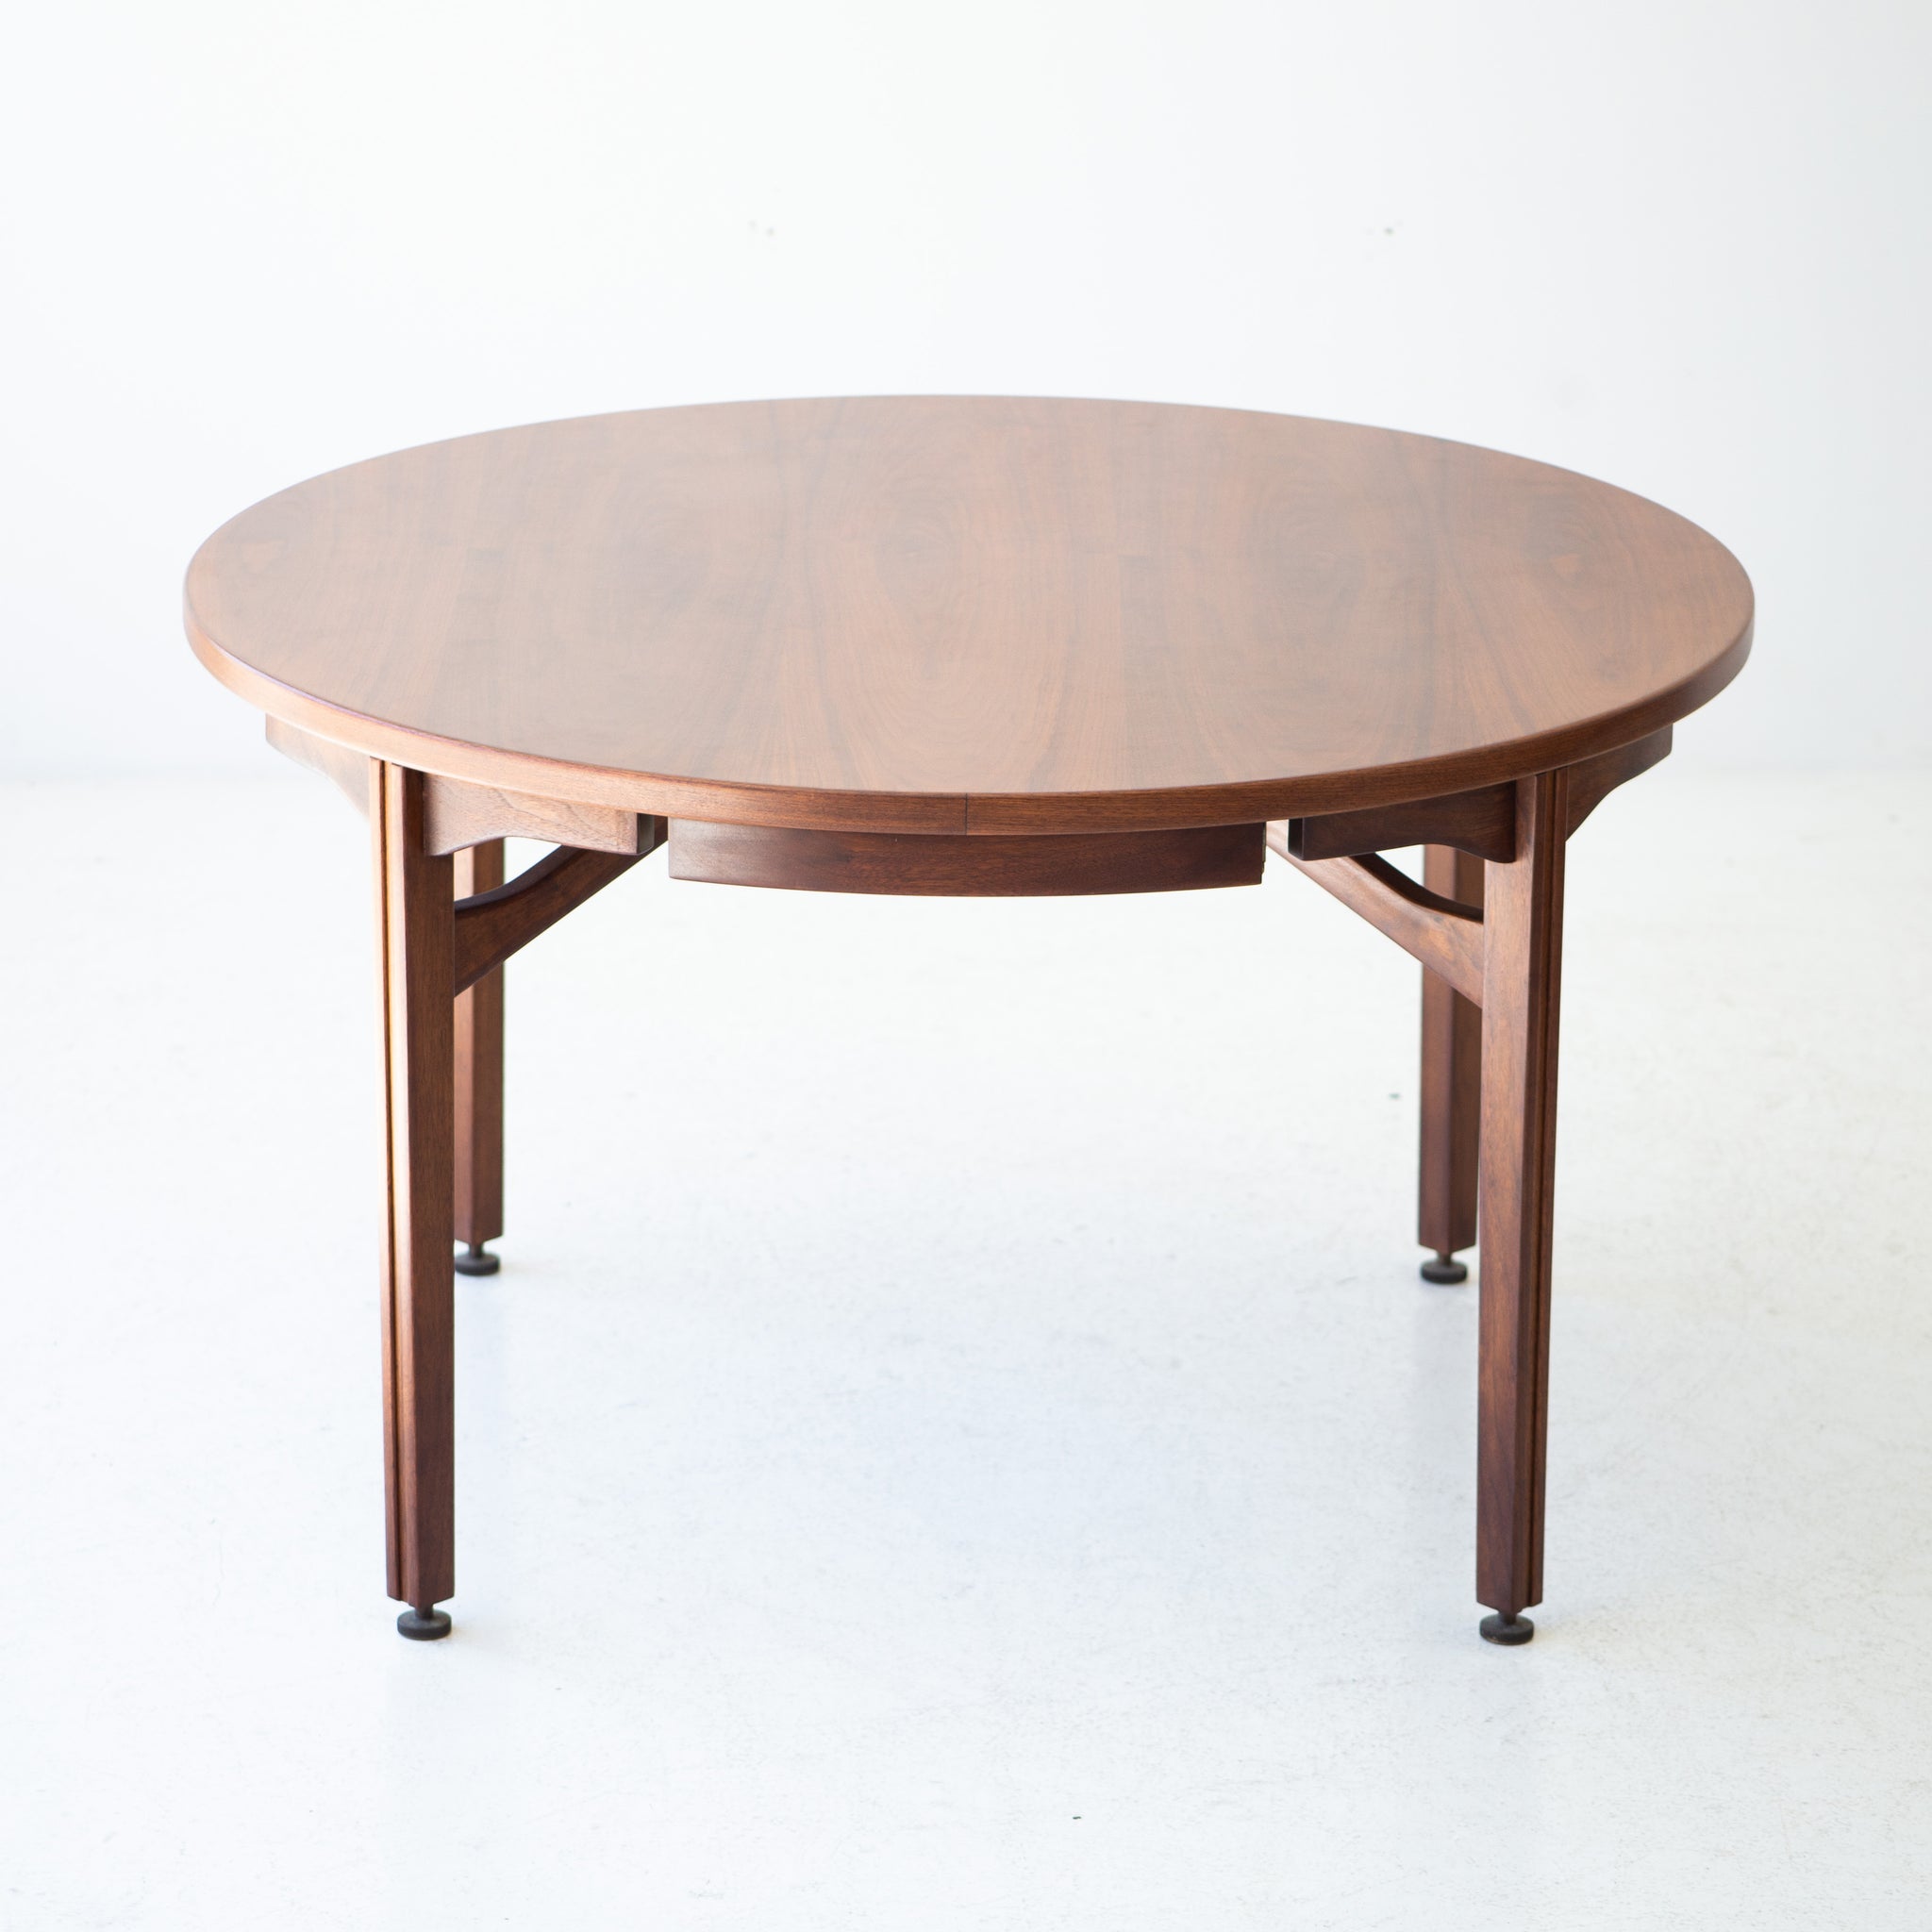 Jens-Risom-Dining-Table-Jens-Risom-Design-Inc-01